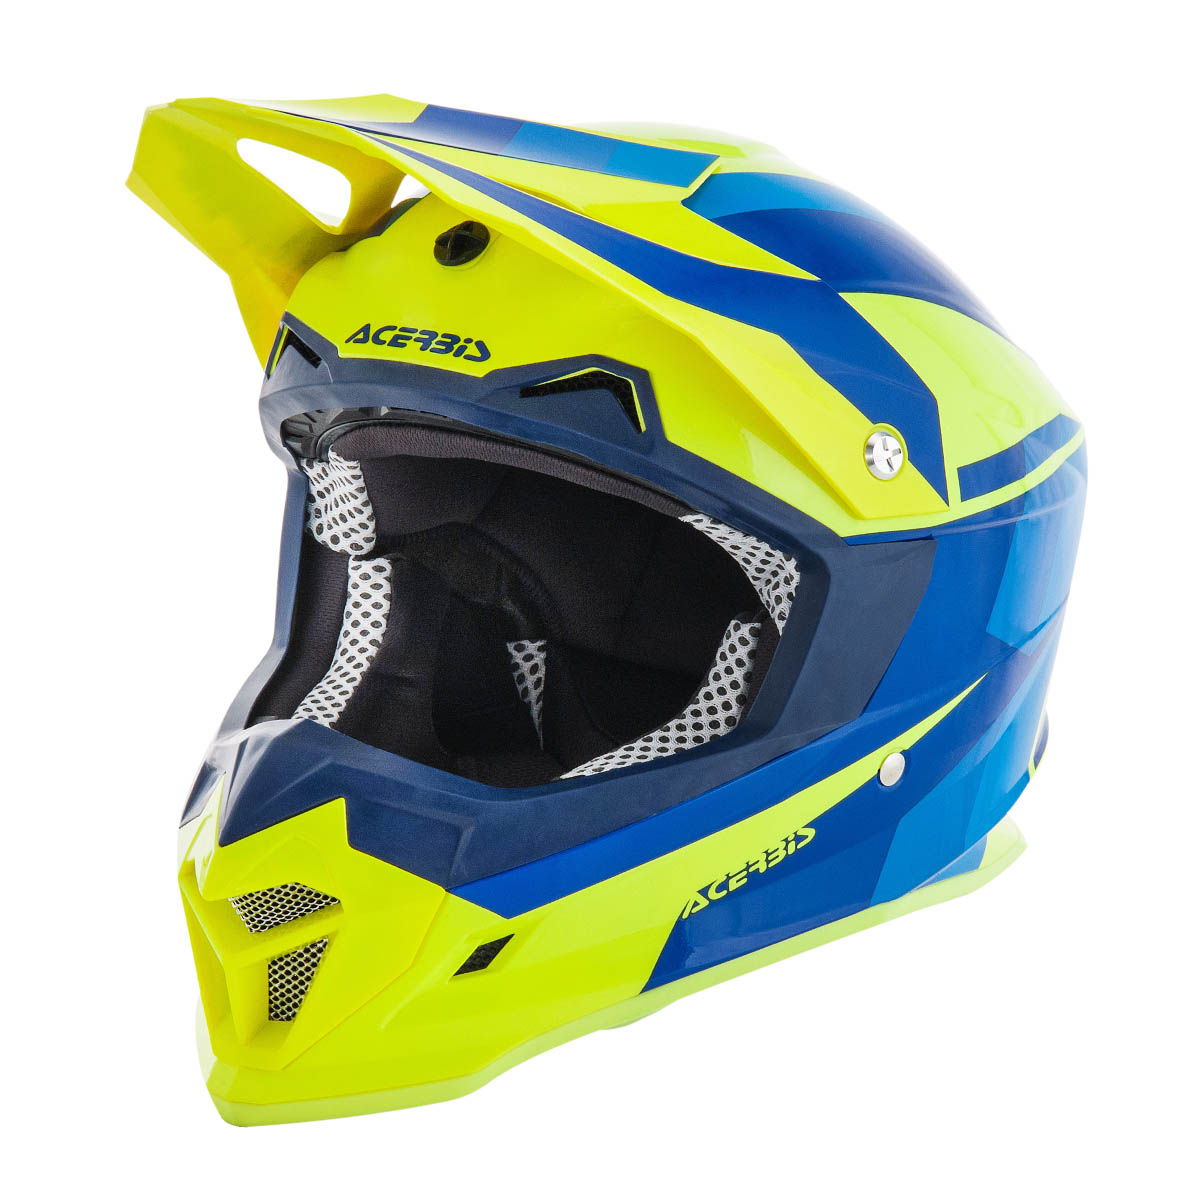 Acerbis Helmet Profile 4 Fluo Yellow/Blue